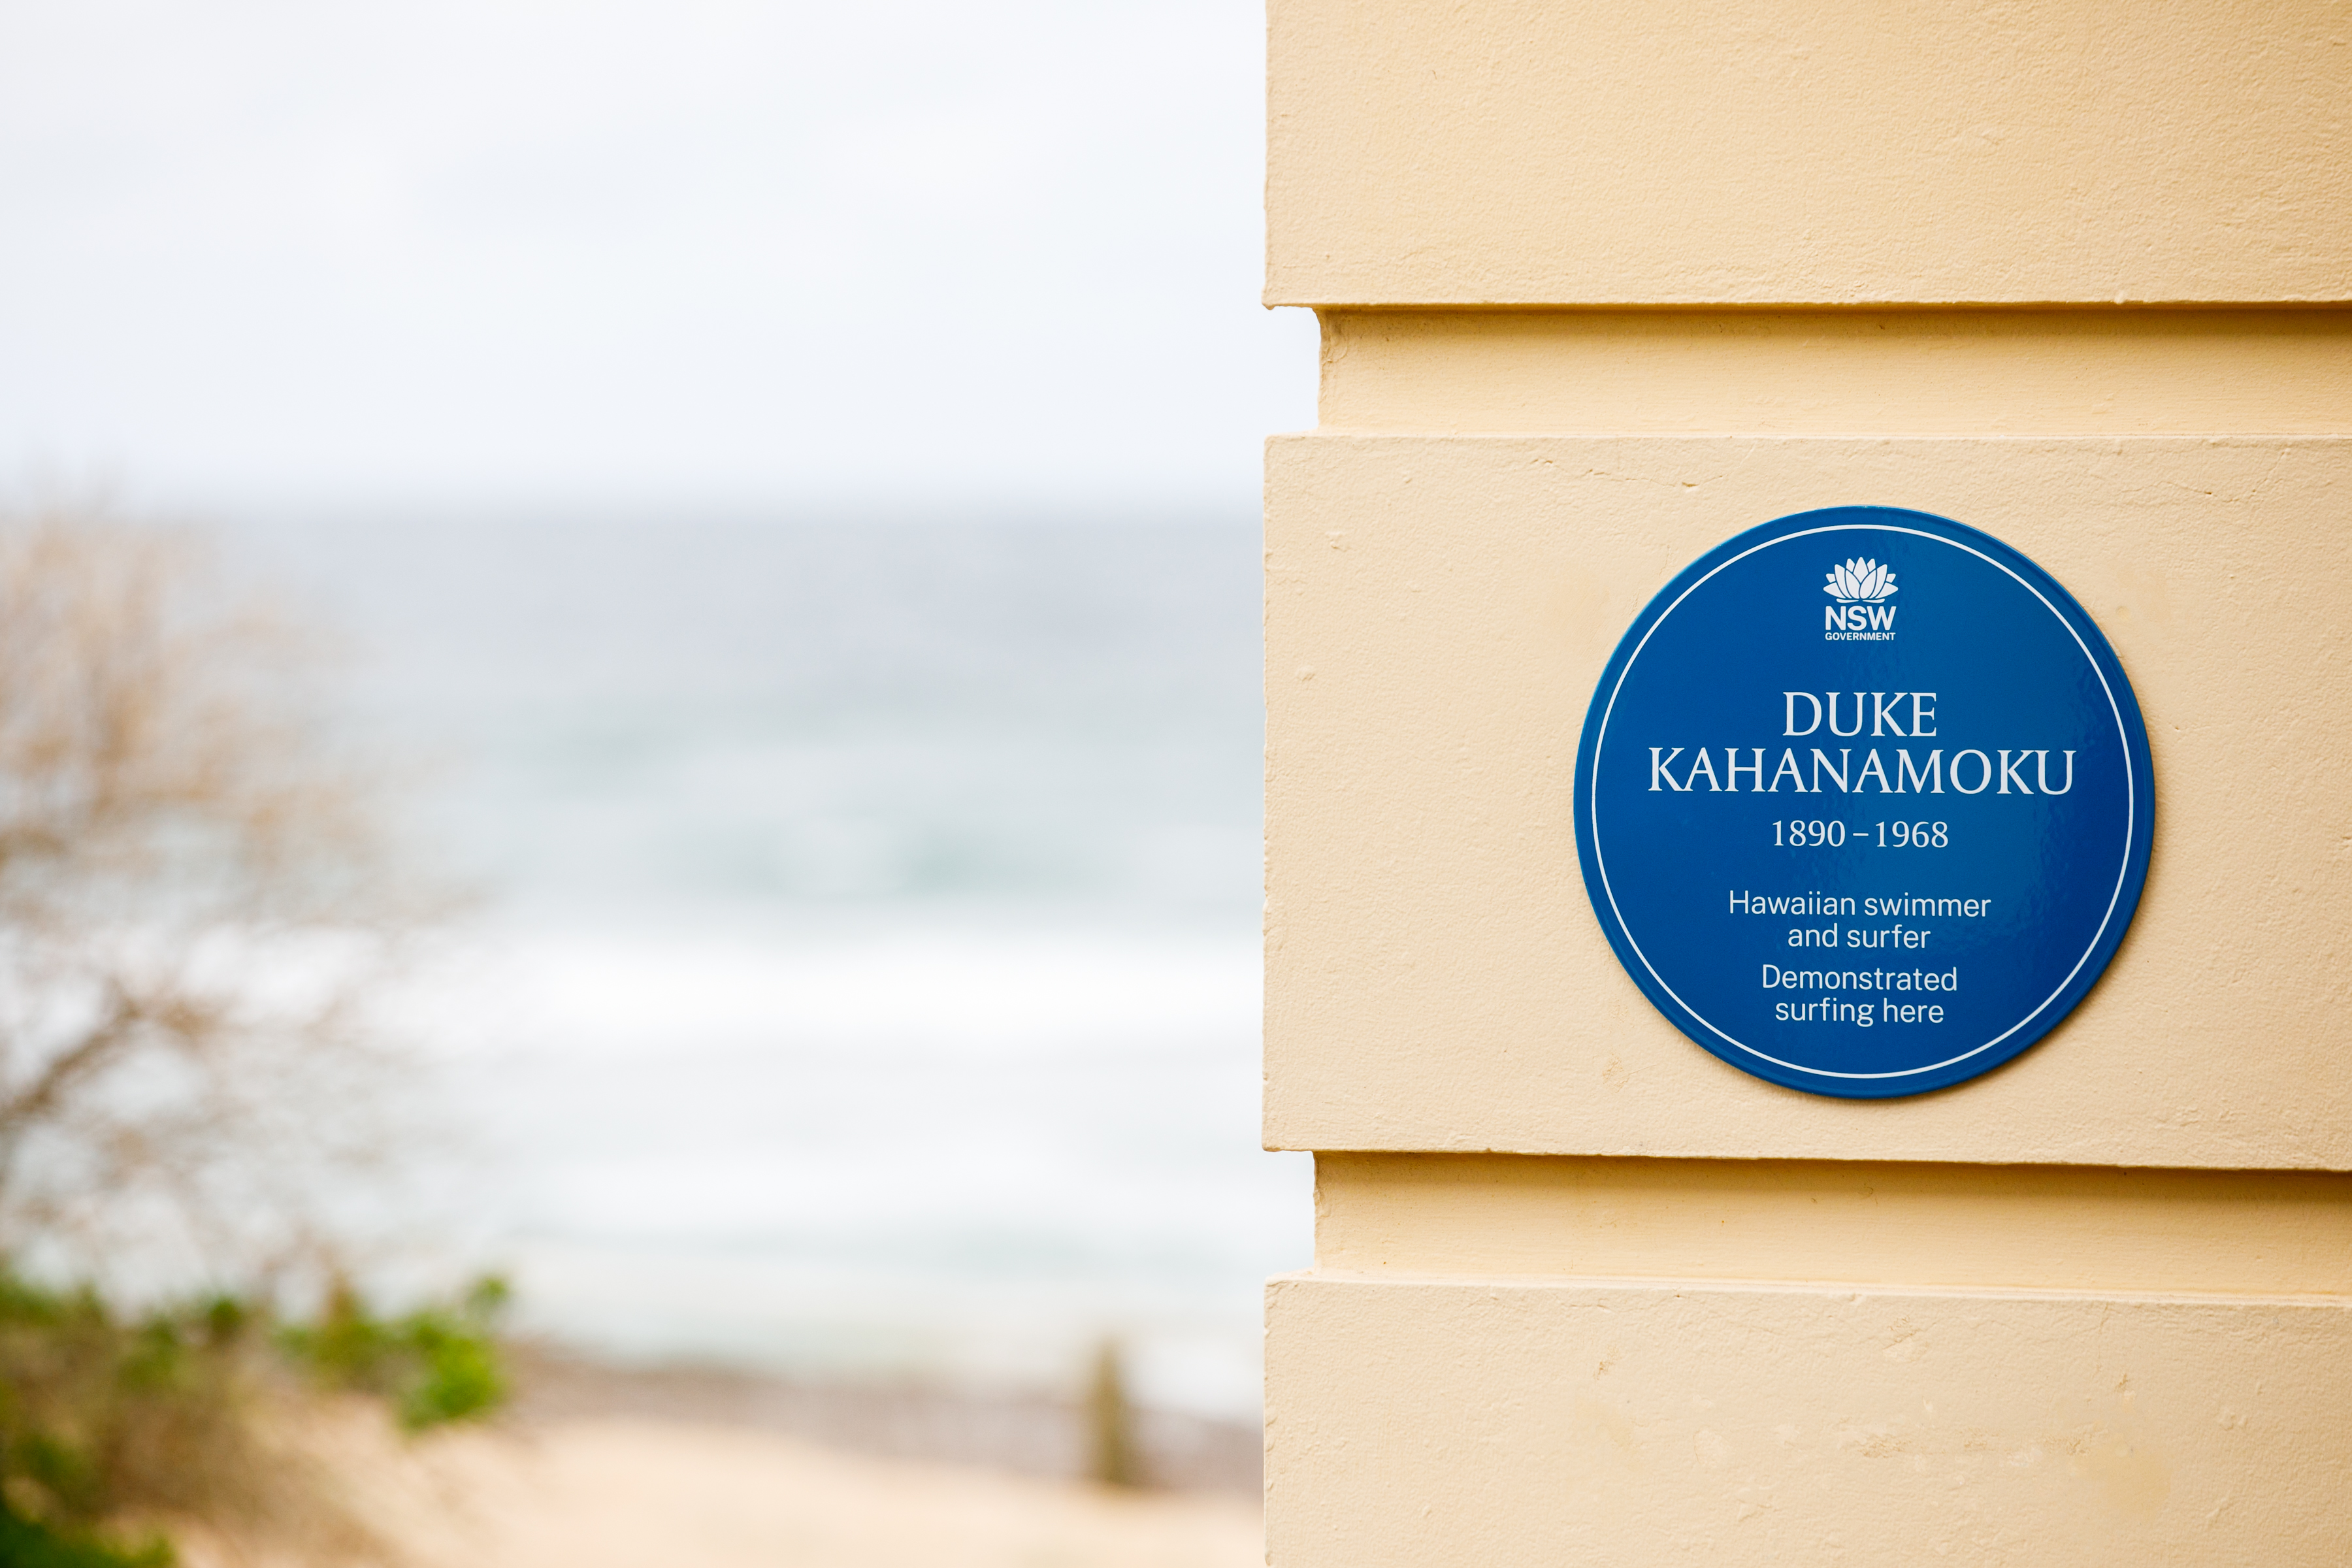 Image 6 of 6 - Duke Kahanamoku plaque on wall at Freshwater Surf club